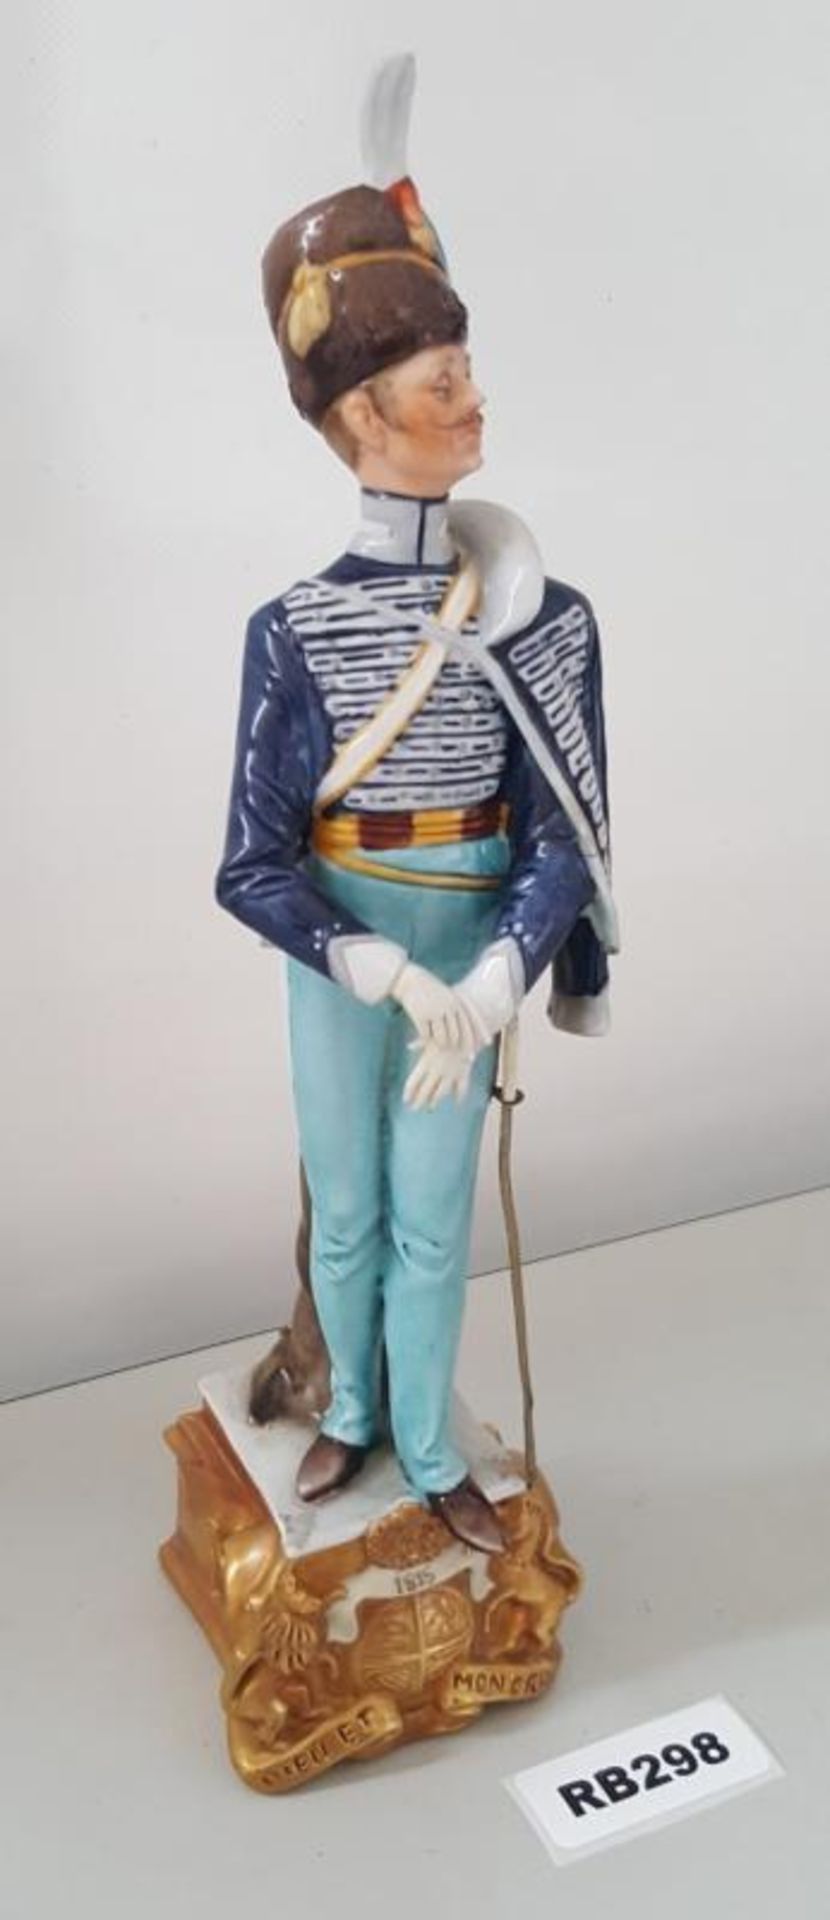 1 x Rare Italian Capodimonte Porcelain Bruno Merli Soldiers Figurines 1815- Ref RB298 E - Image 5 of 5